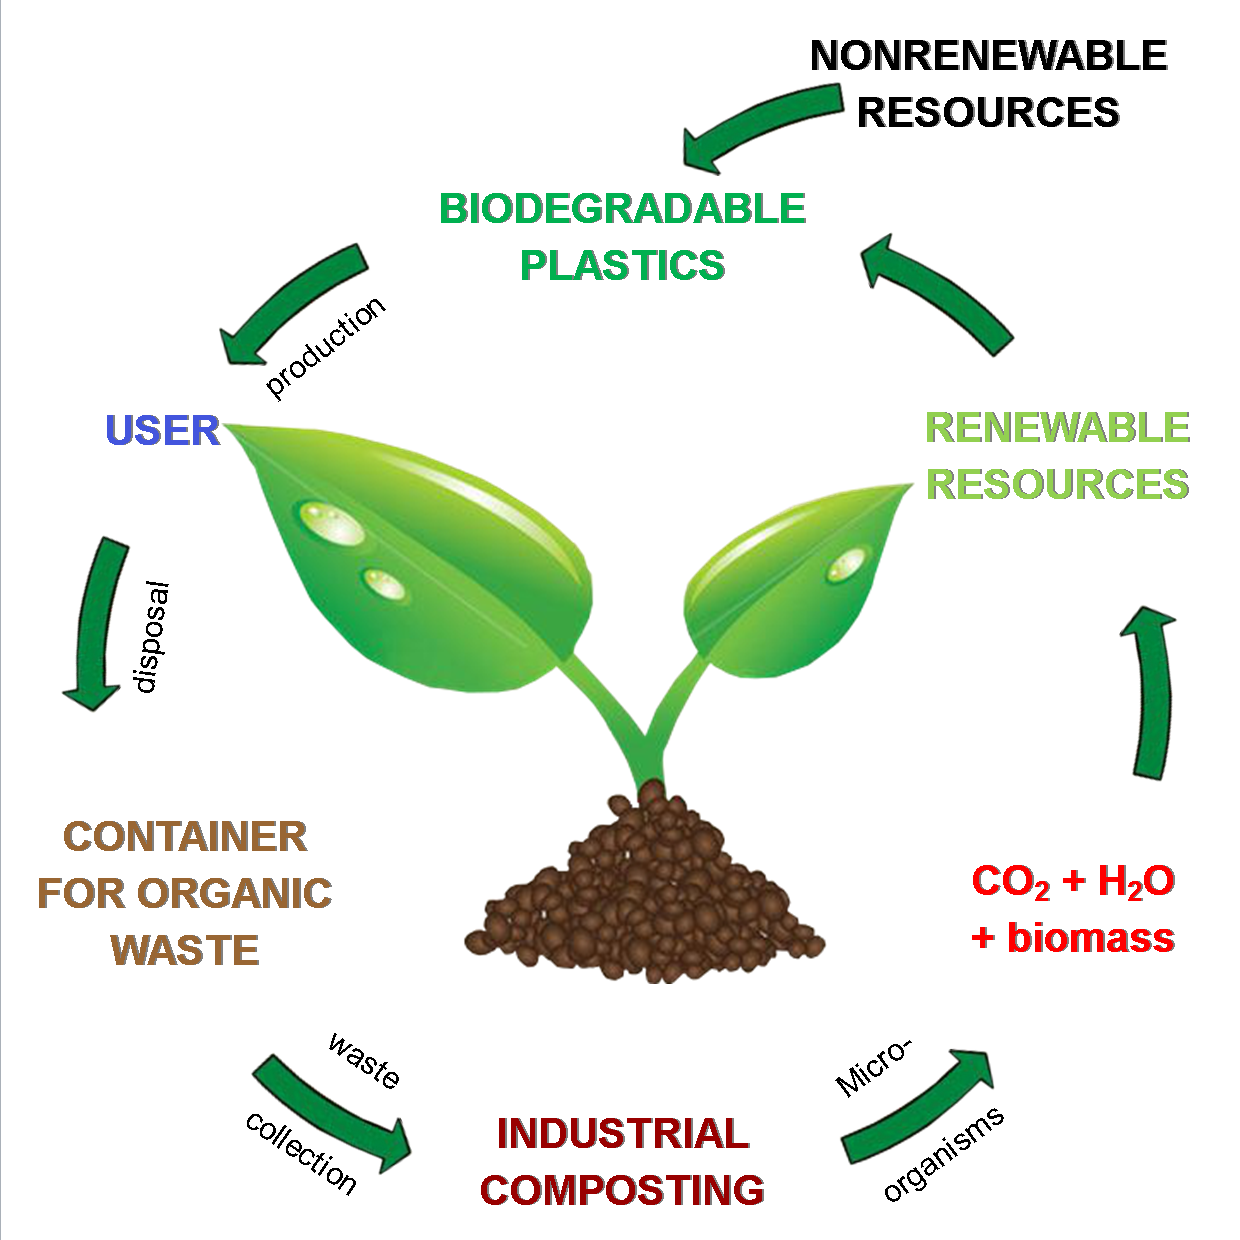 4 different degradation technologies for biodegradable plastics